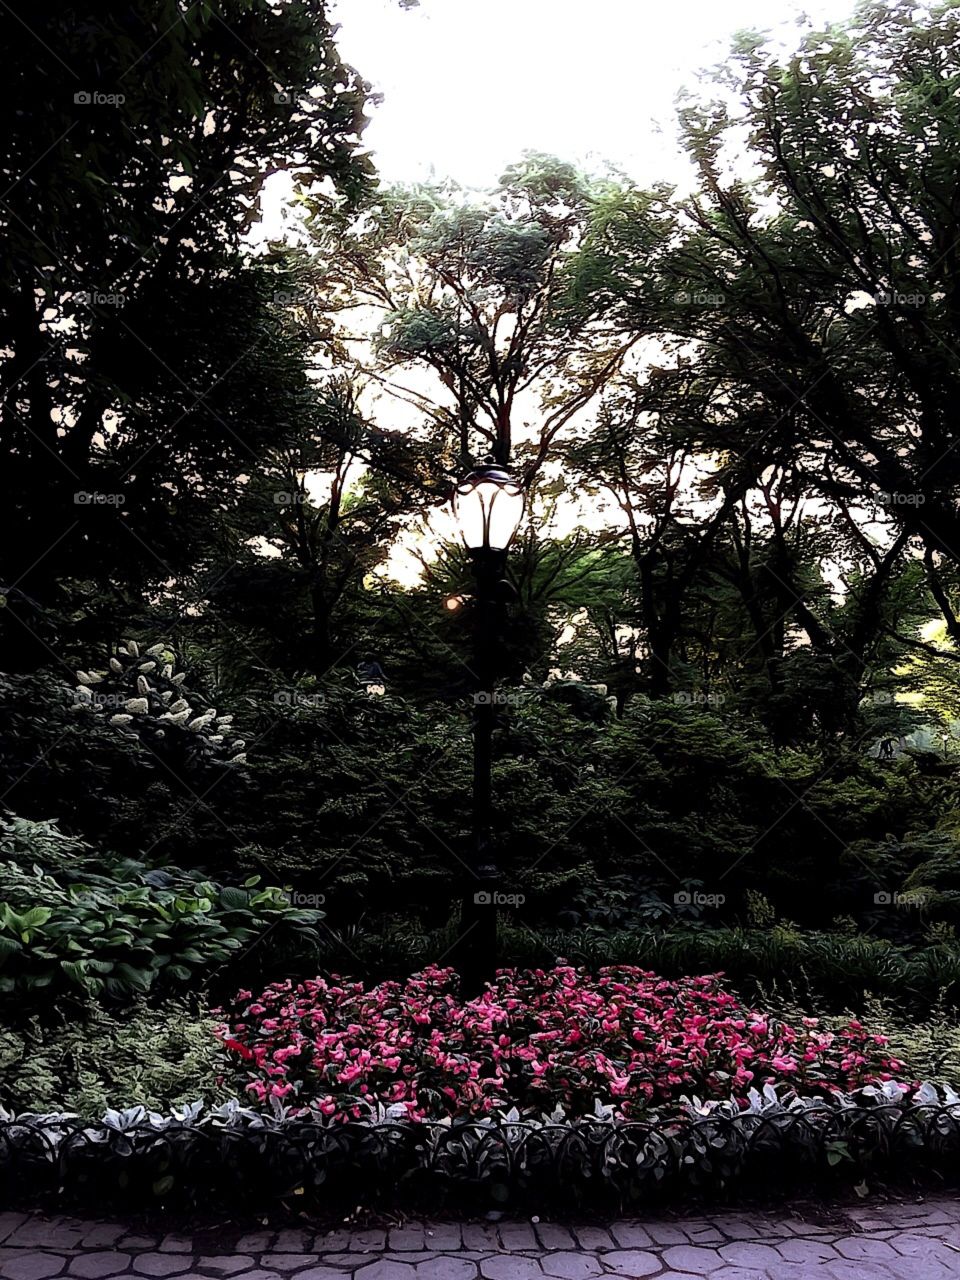 Olmsted Flower Bed - Central Park, New York City. Instagram,@PennyPeronto